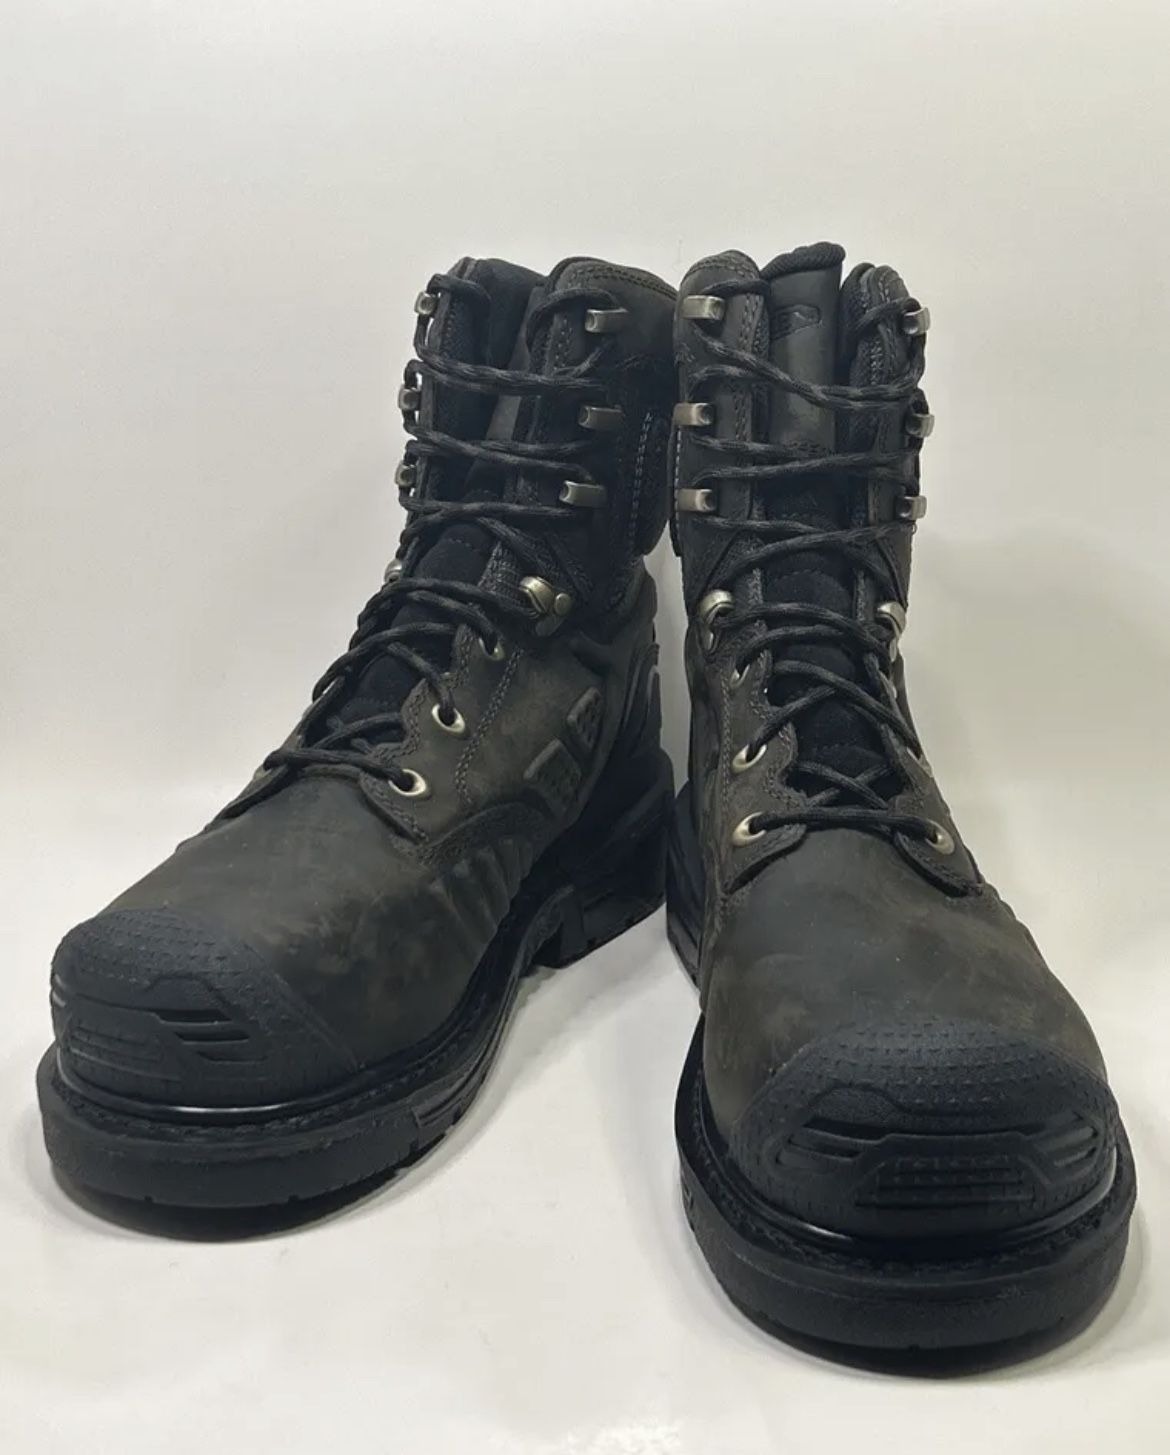 Size 8.5EE - Men’s KEEN Utility 8" Composite Toe WP Work Boots 1022112 Wmns 10EE